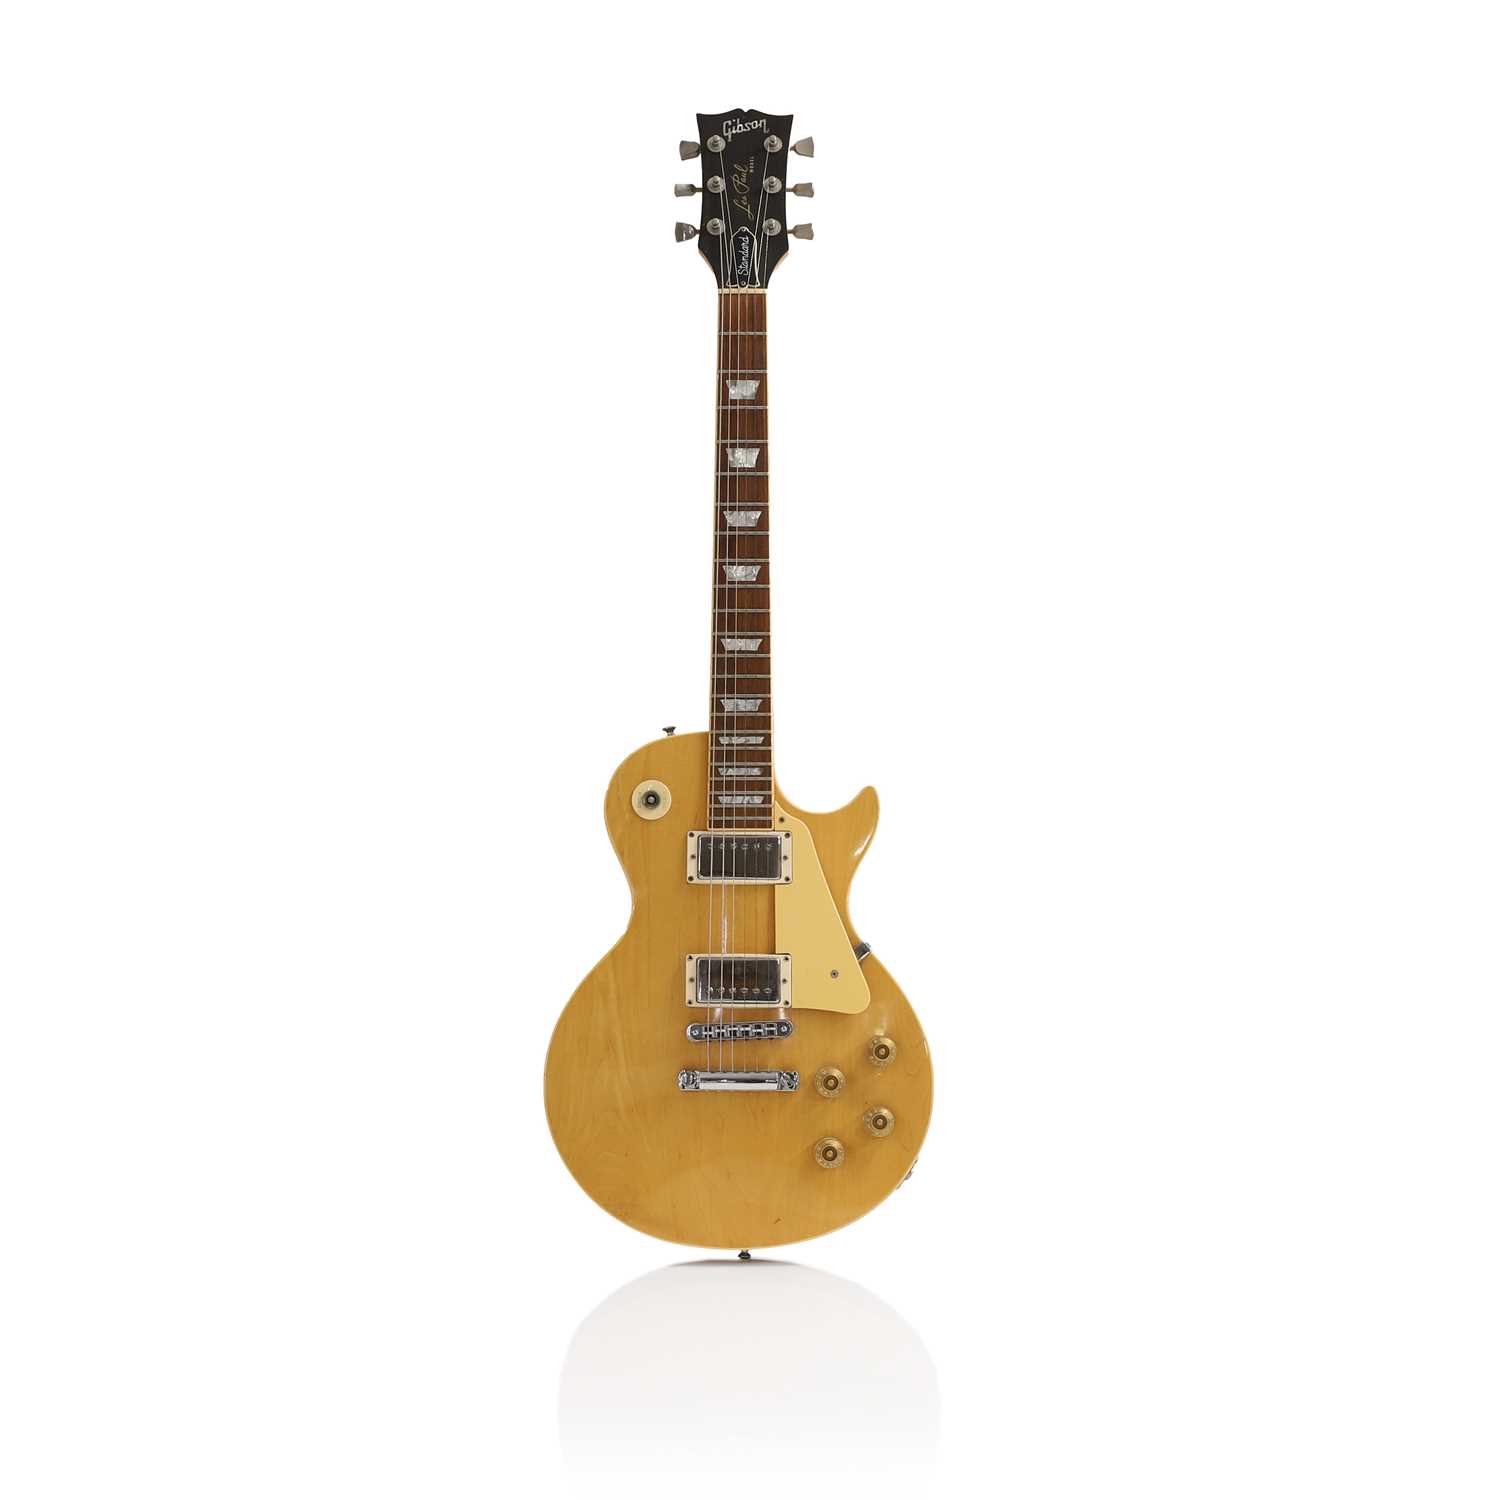 A 1979 Gibson Les Paul 'Standard' electric guitar,